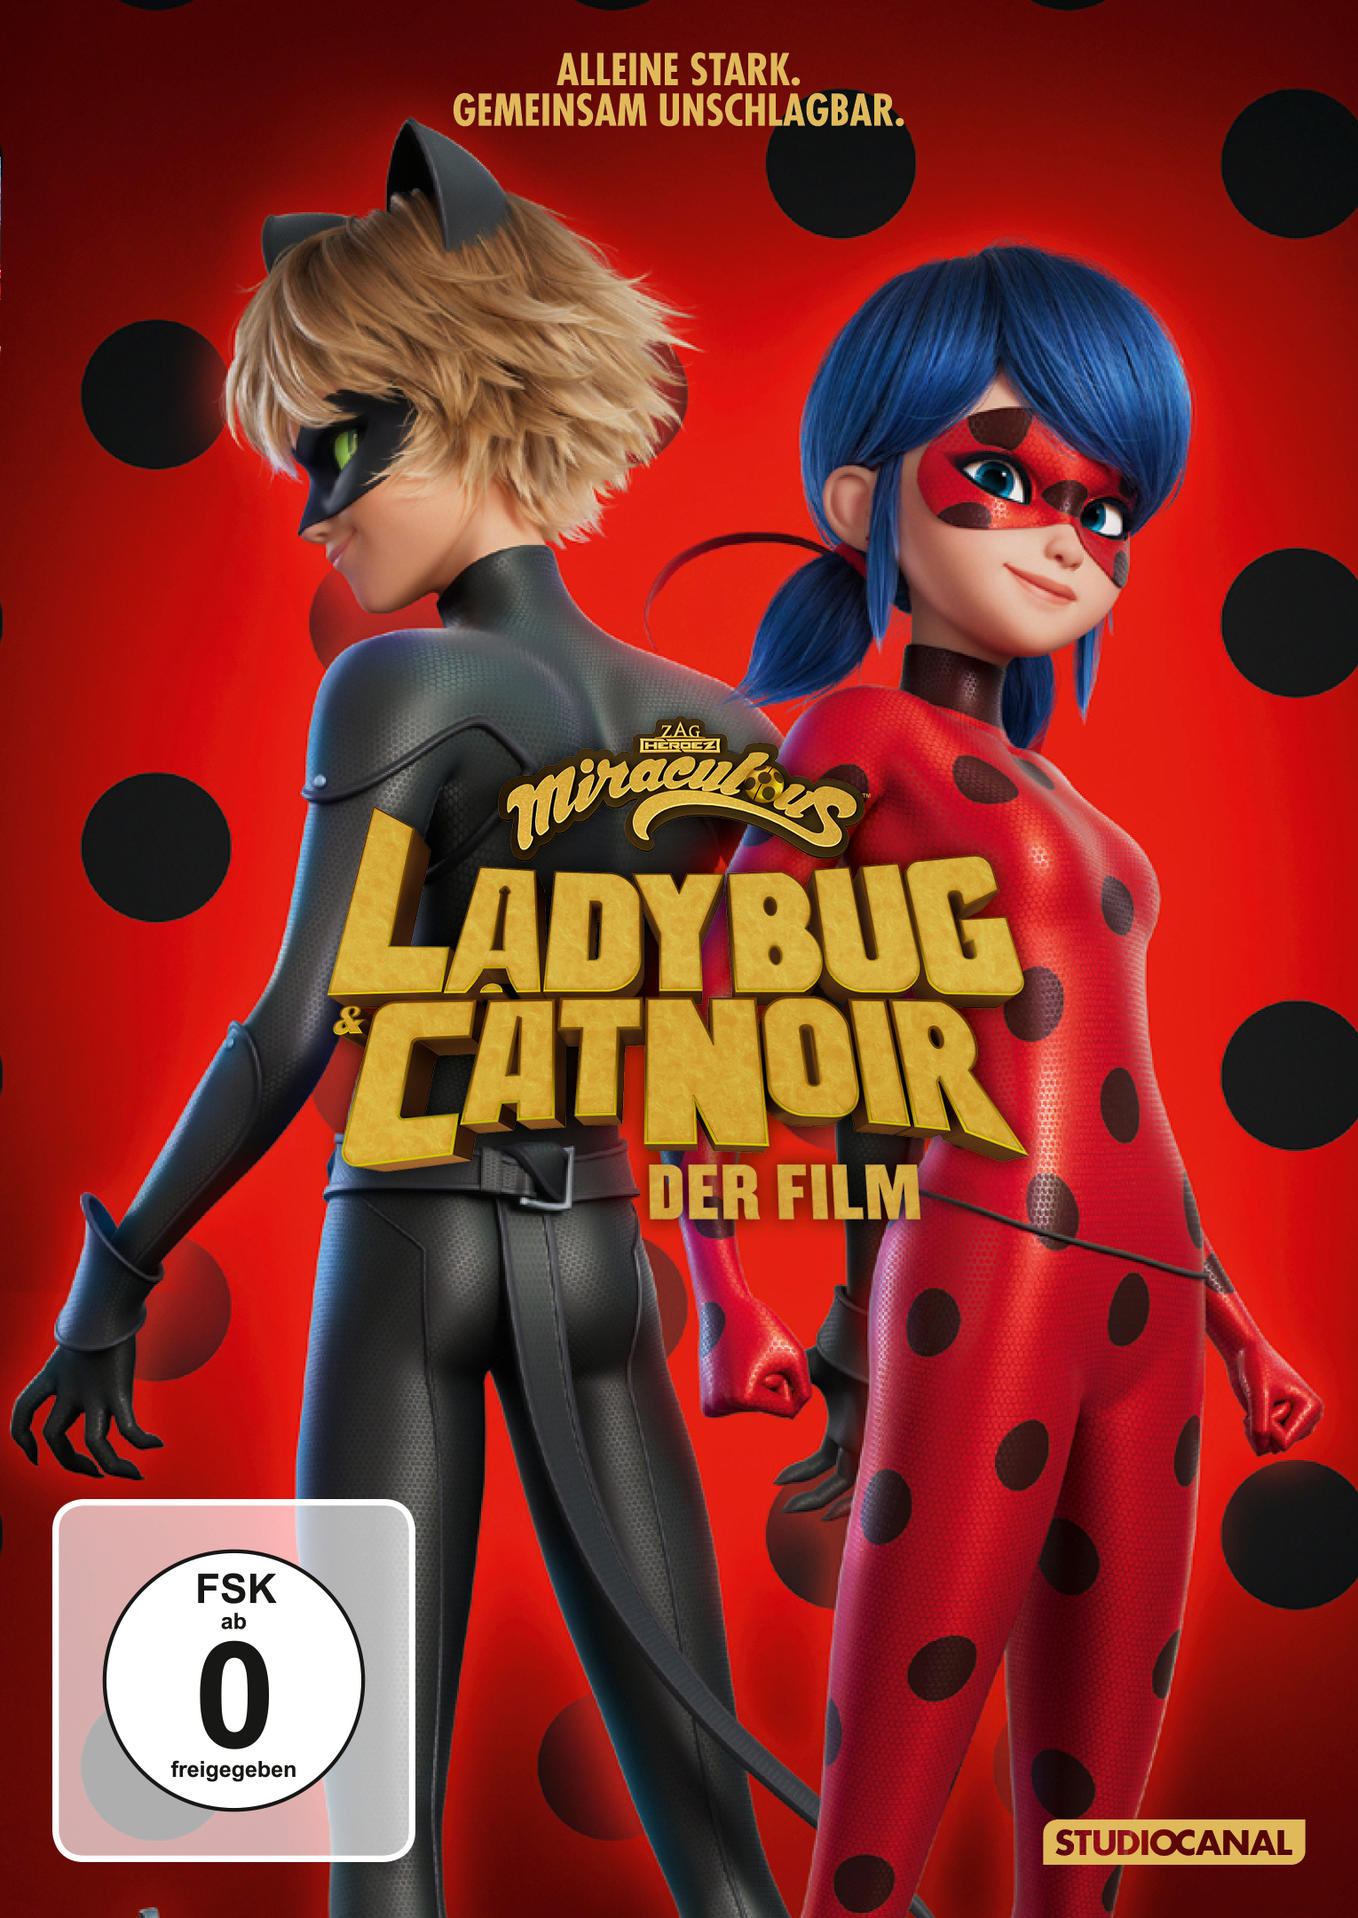 Cat & Film Ladybug Der Noir Miraculous: DVD -